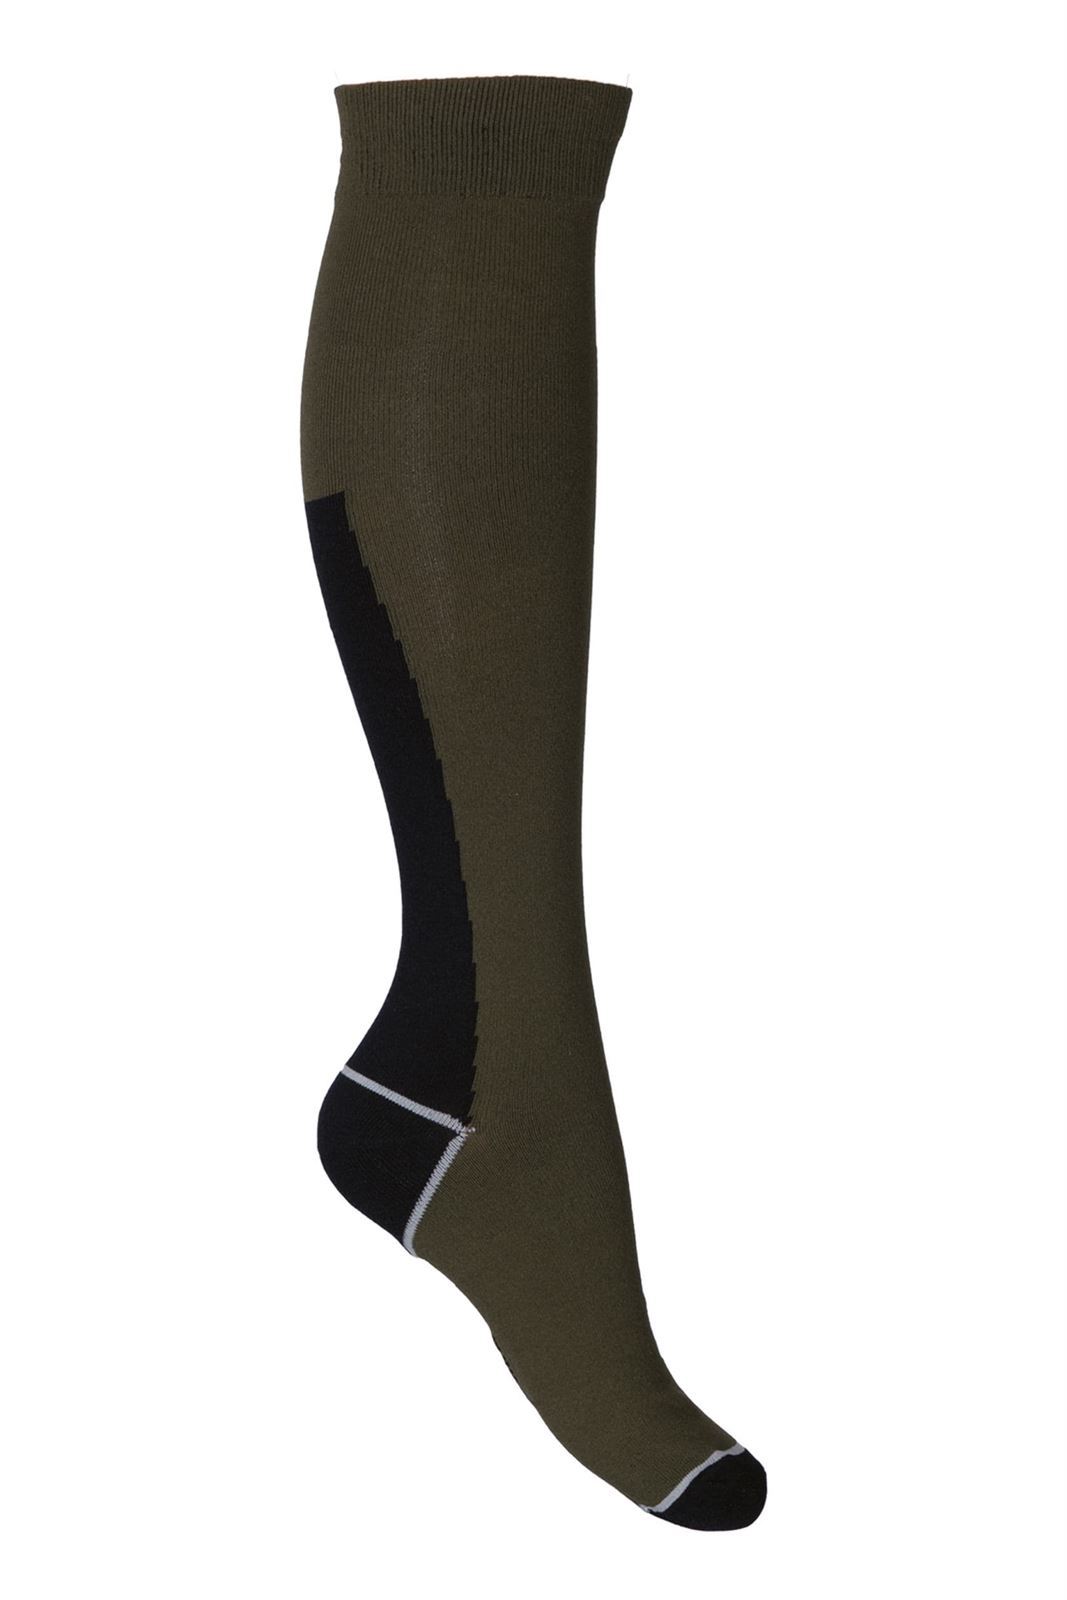 Calcetines HKM Sports Equipment pack de 3 pares color negro/marino/verde talla 43/46 - Imagen 2